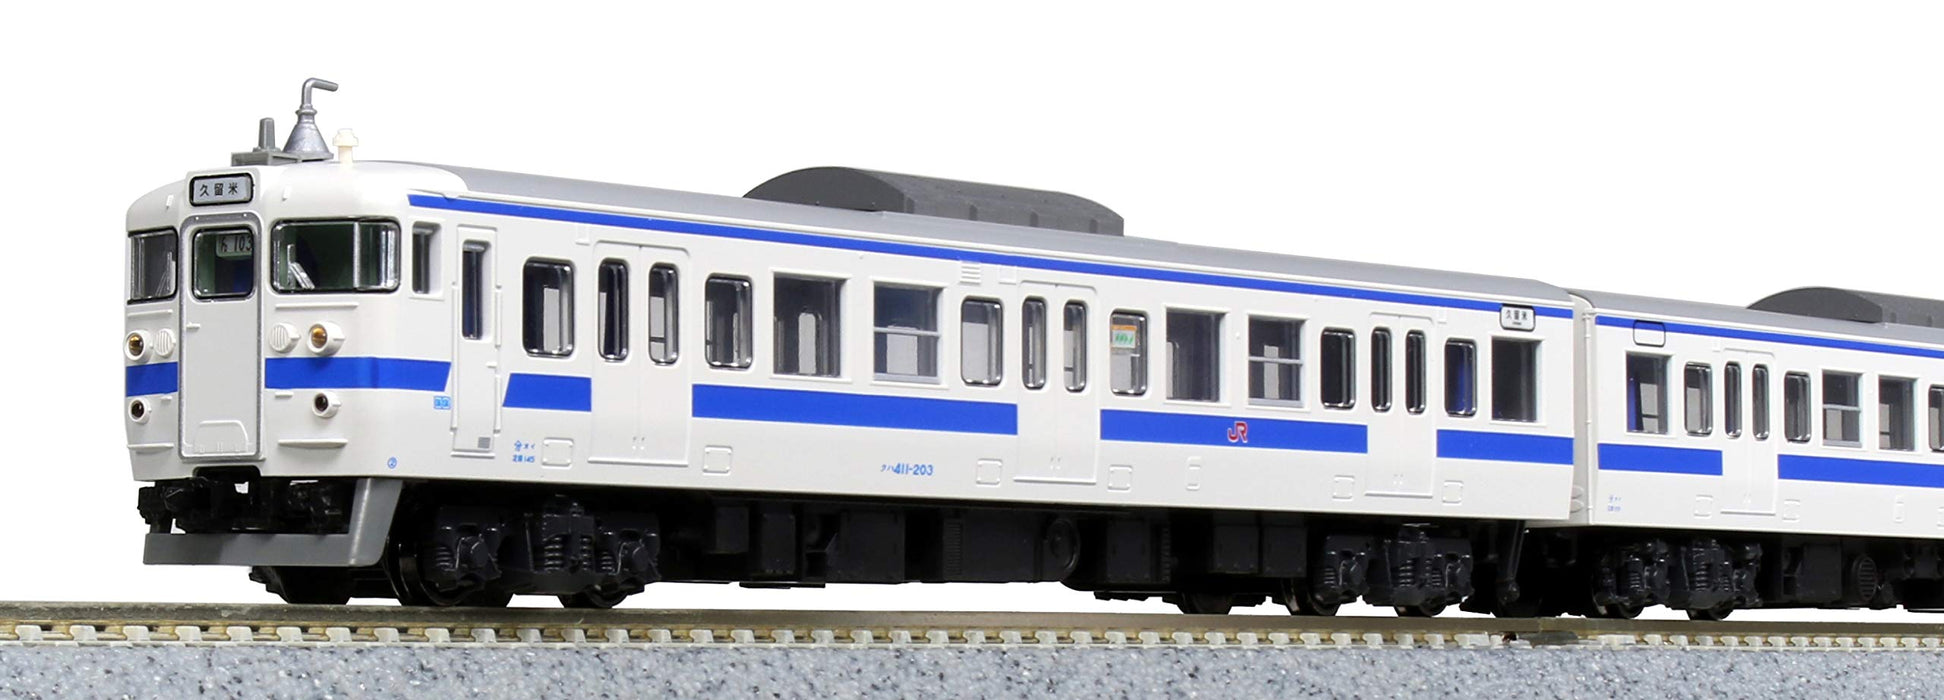 Kato Railway Model Train - N Gauge 415 Series 4-Car Add-On Set Kyushu Color